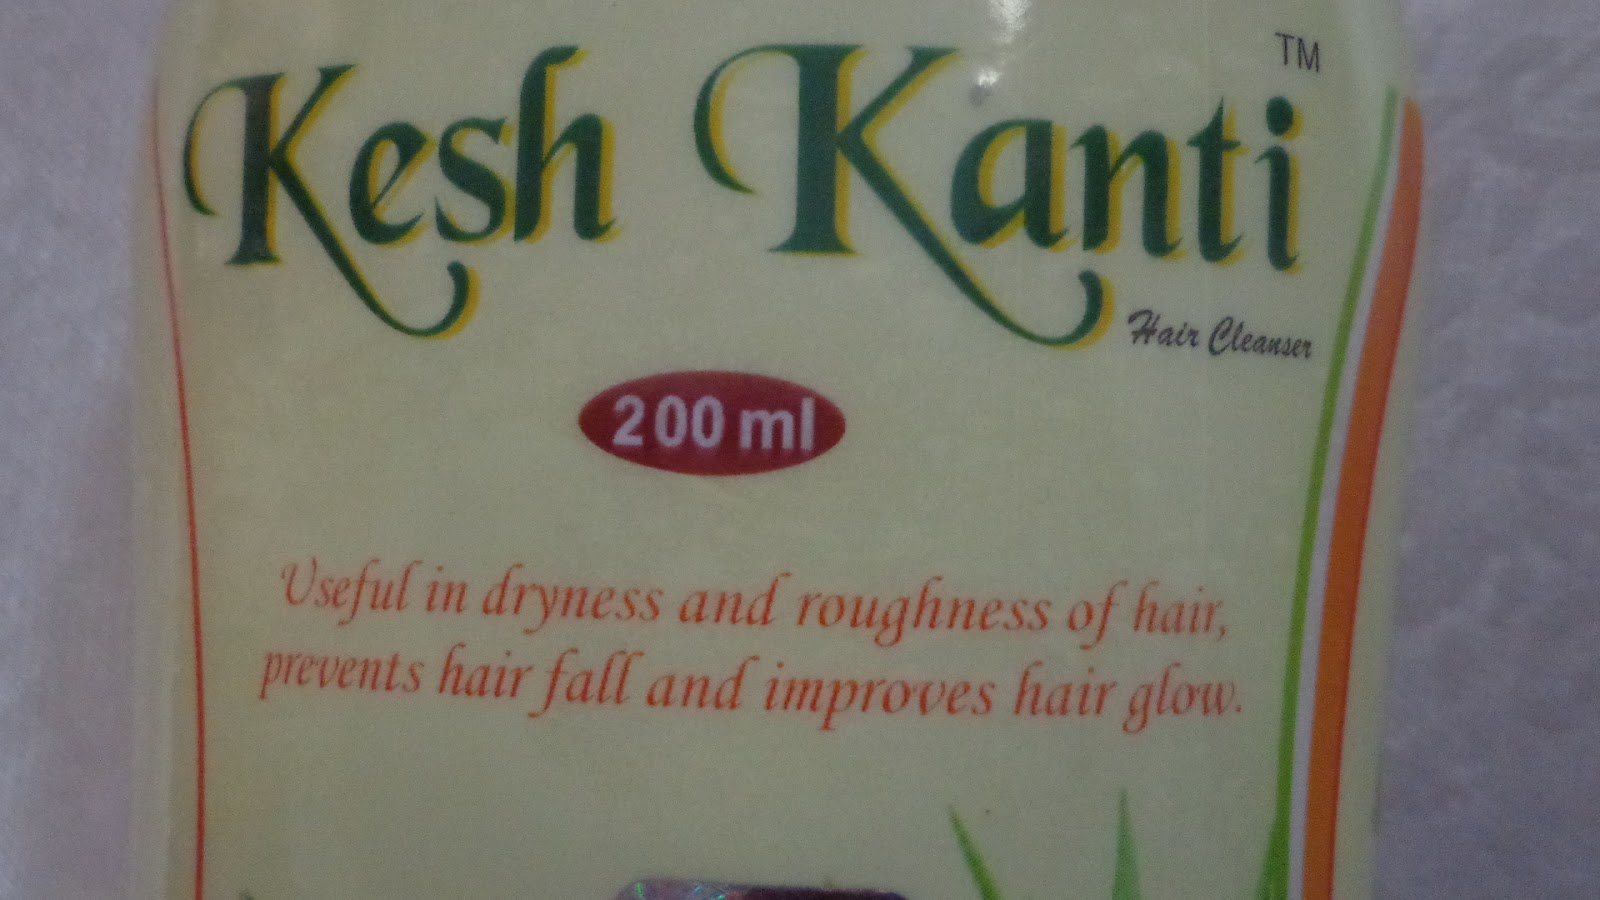 Patanjali Kesh Kanti Shampoo Review-Hair Cleanser